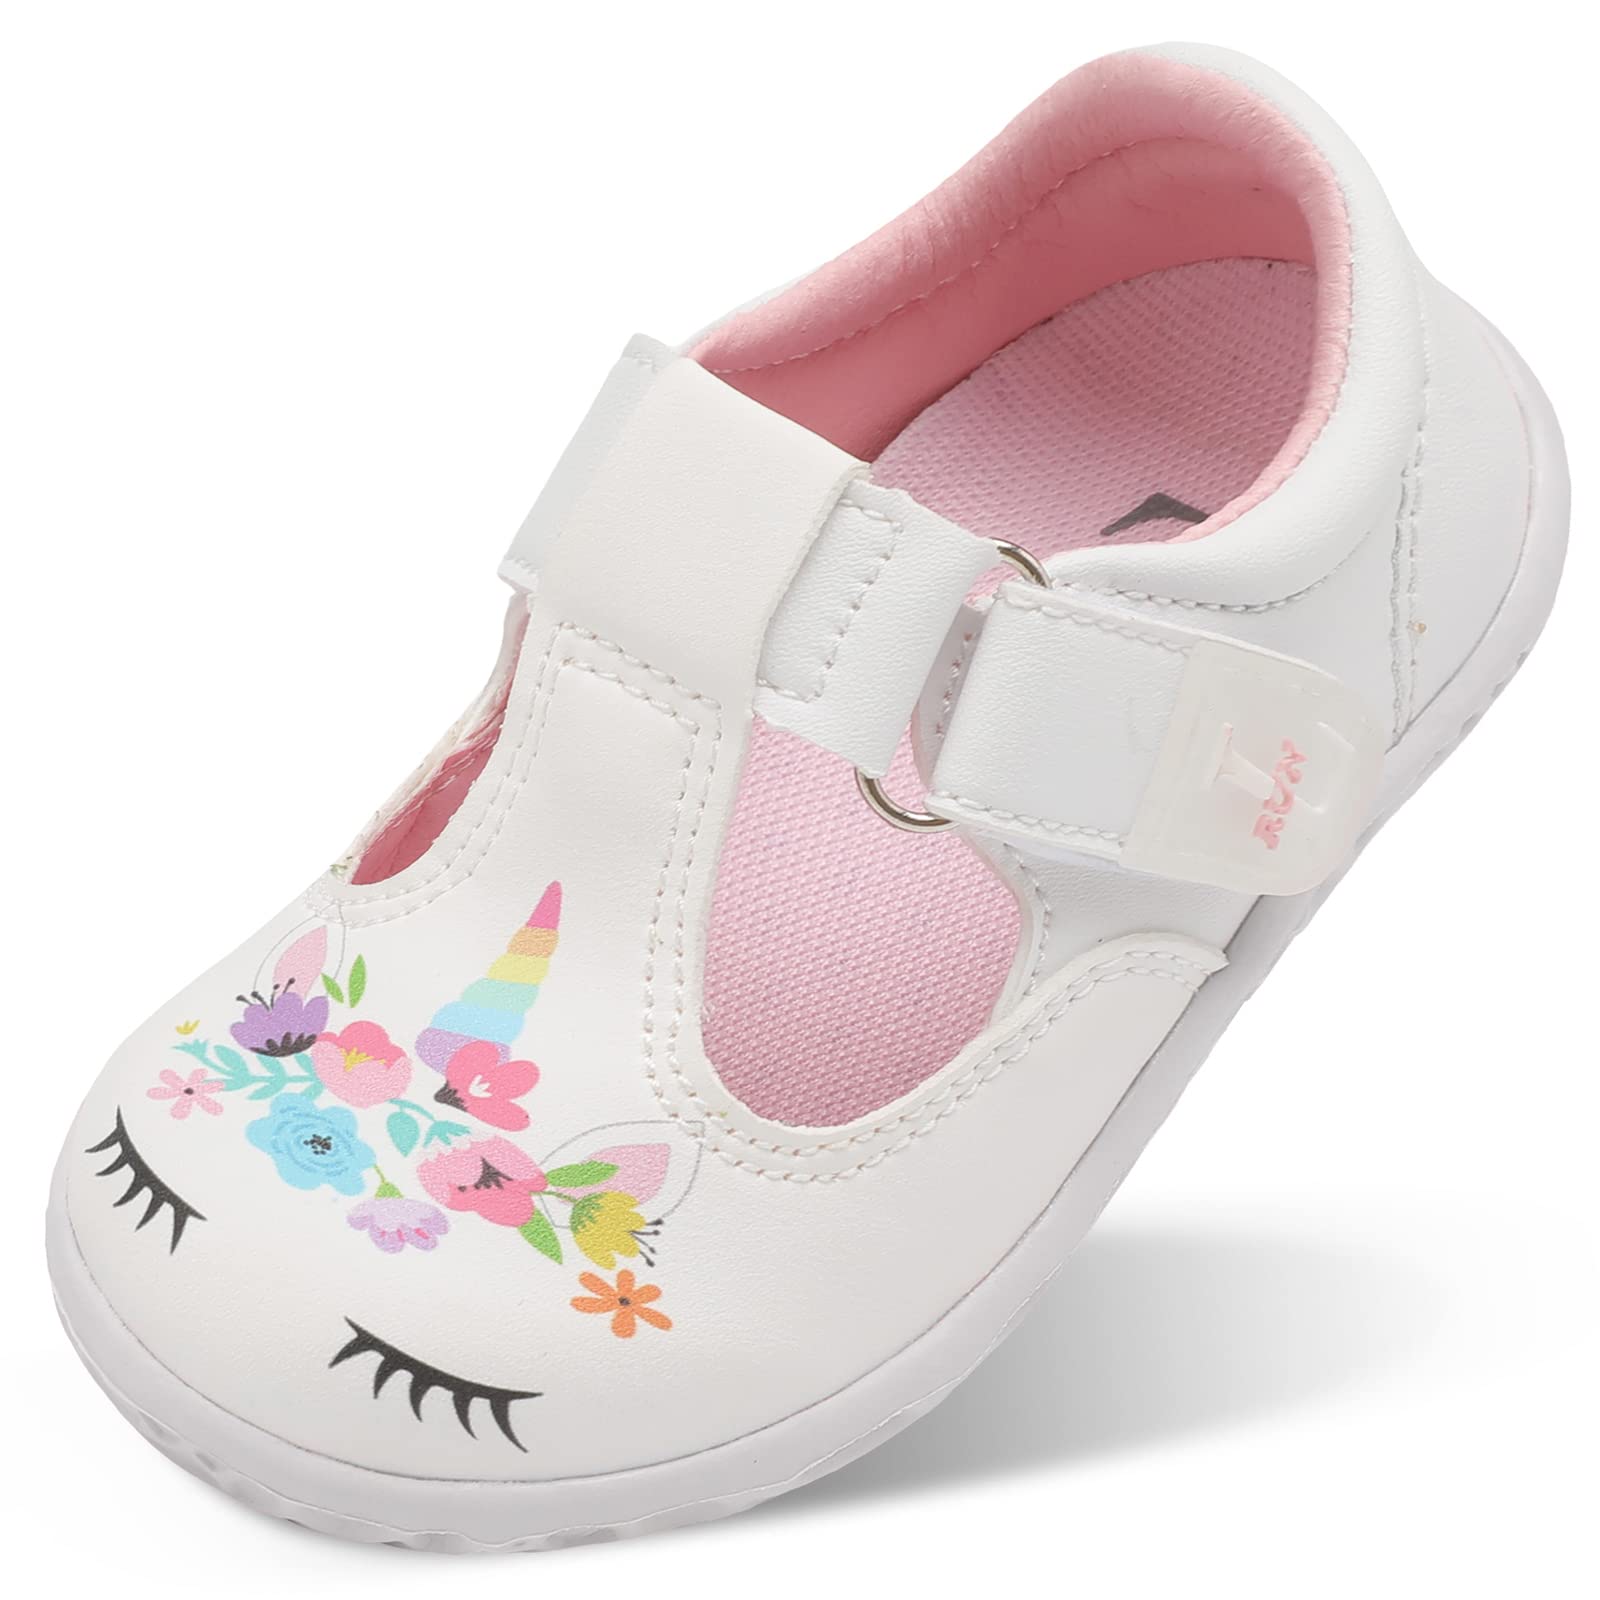 L-RUN Toddler Mary Jane Dress Shoes Baby Girl Walking Shoes Anti-Slip Ballet Flats for Girls Beige M US 5 Toddler